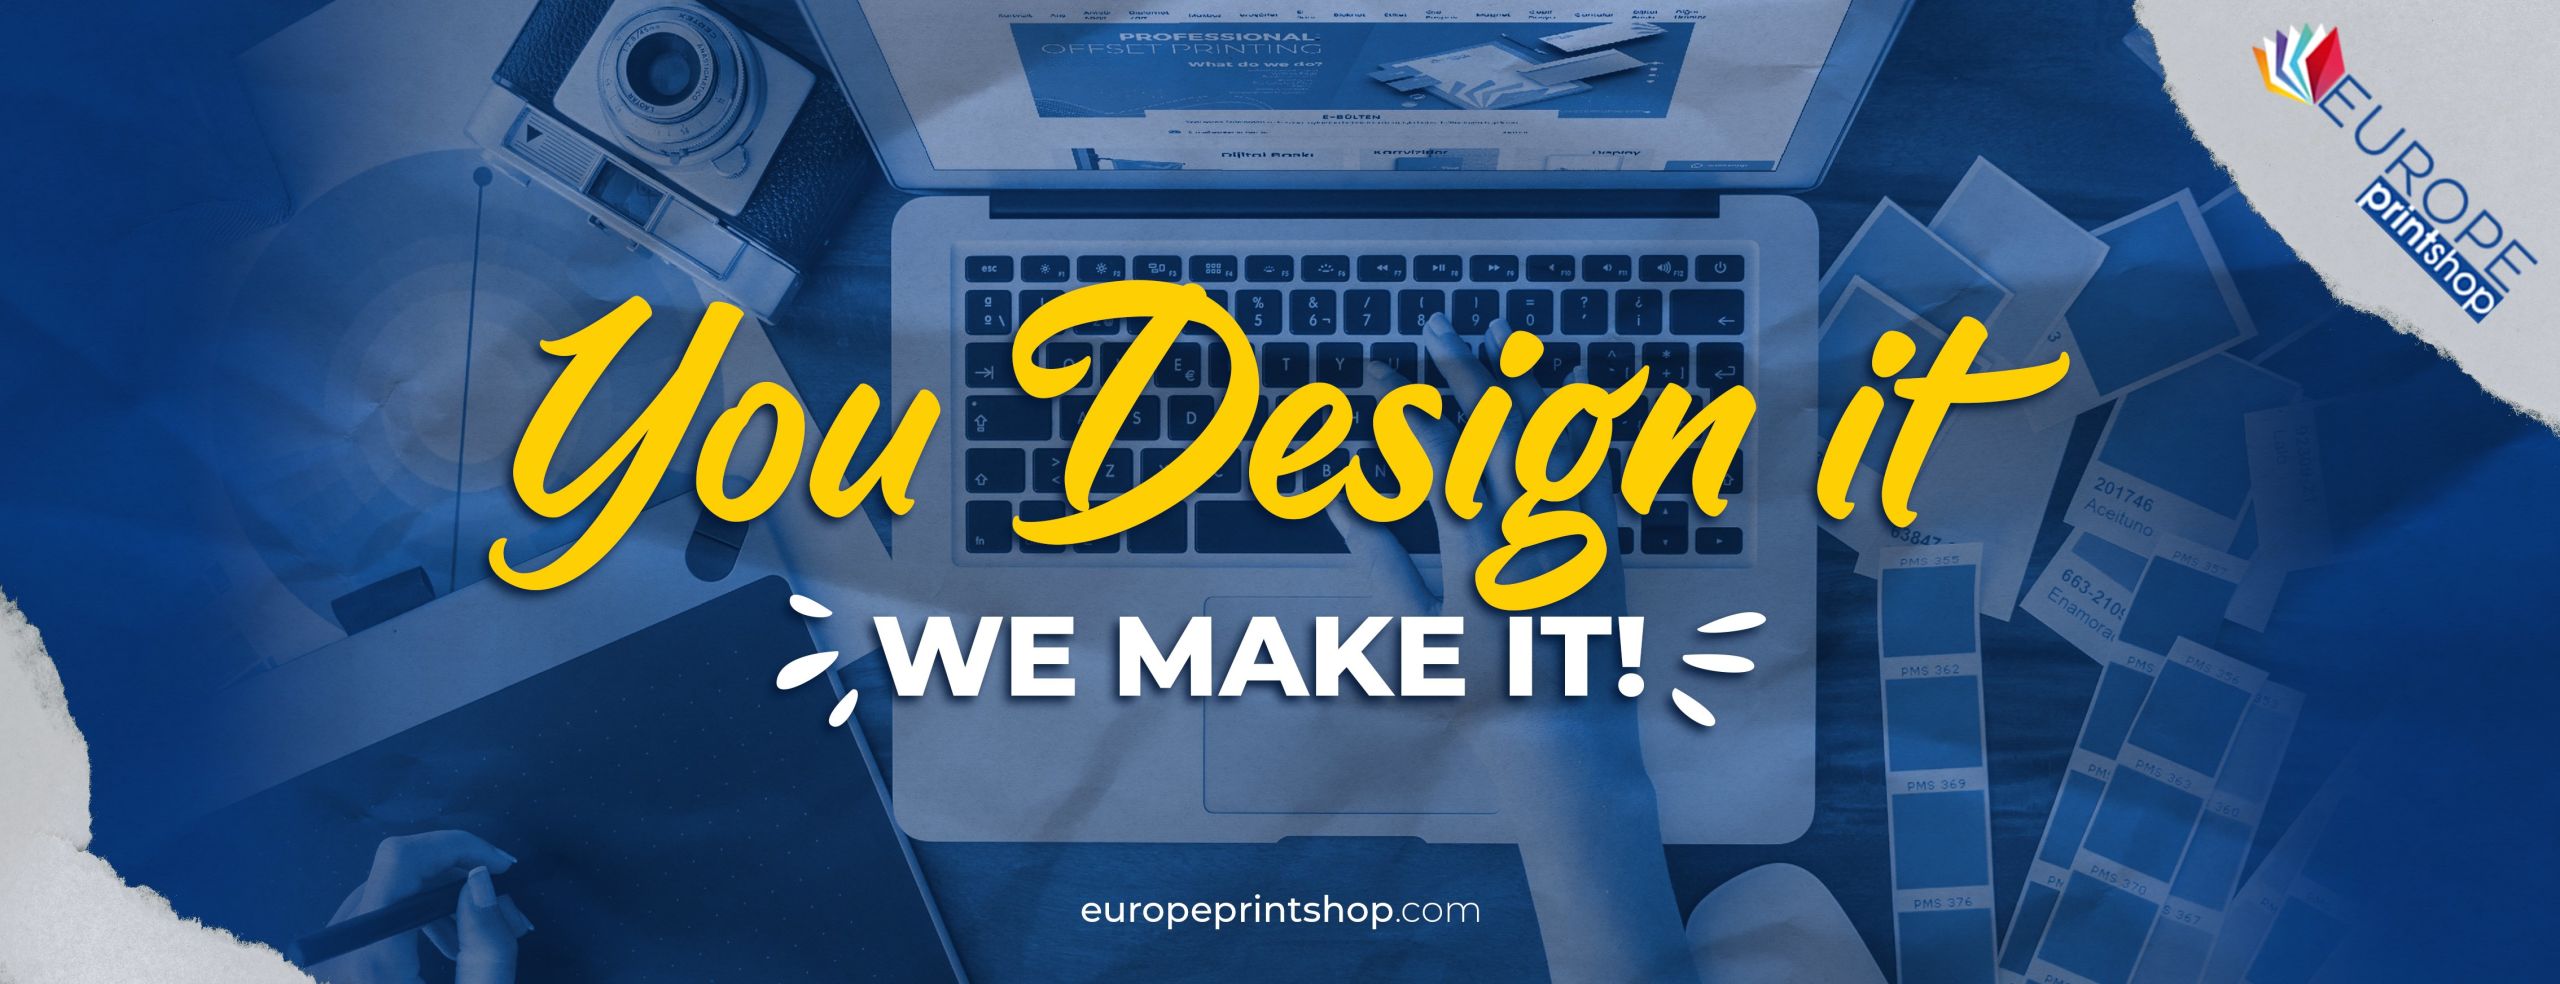 you design it we make it